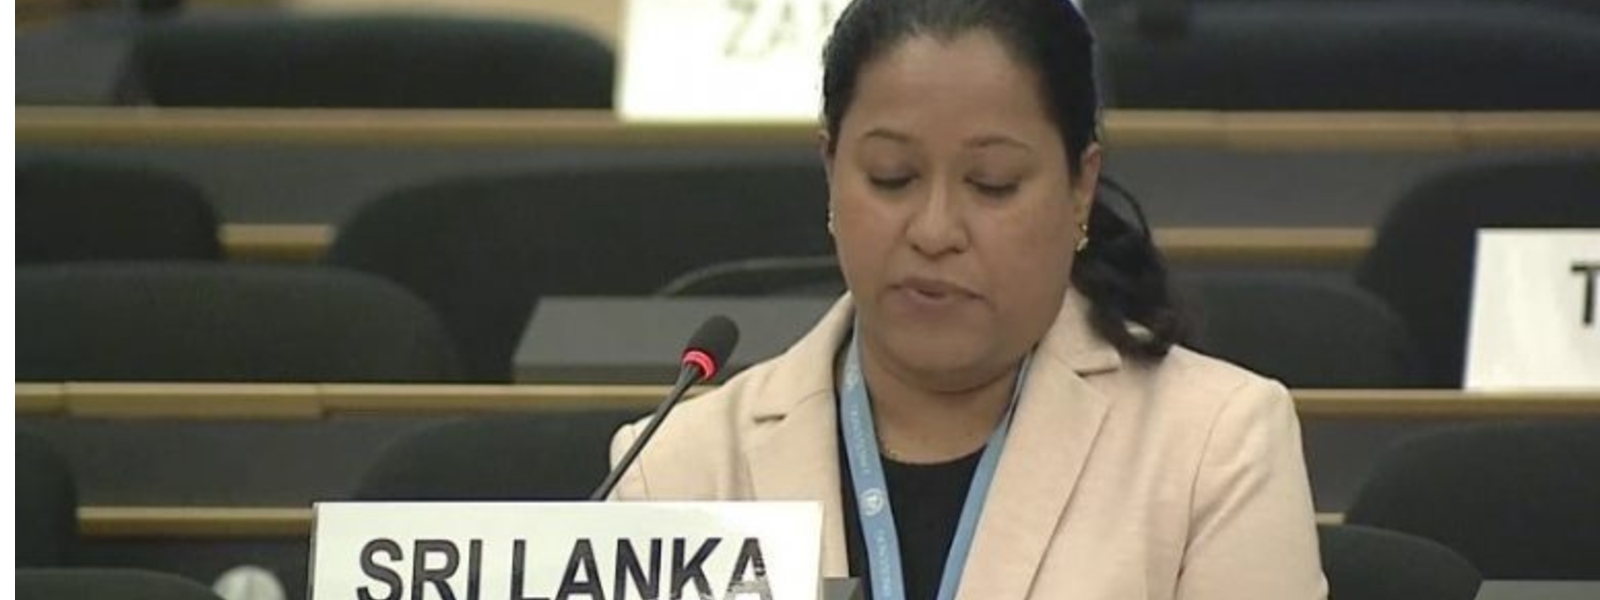 Sri Lanka responds to UN Human Rights Chief’s report